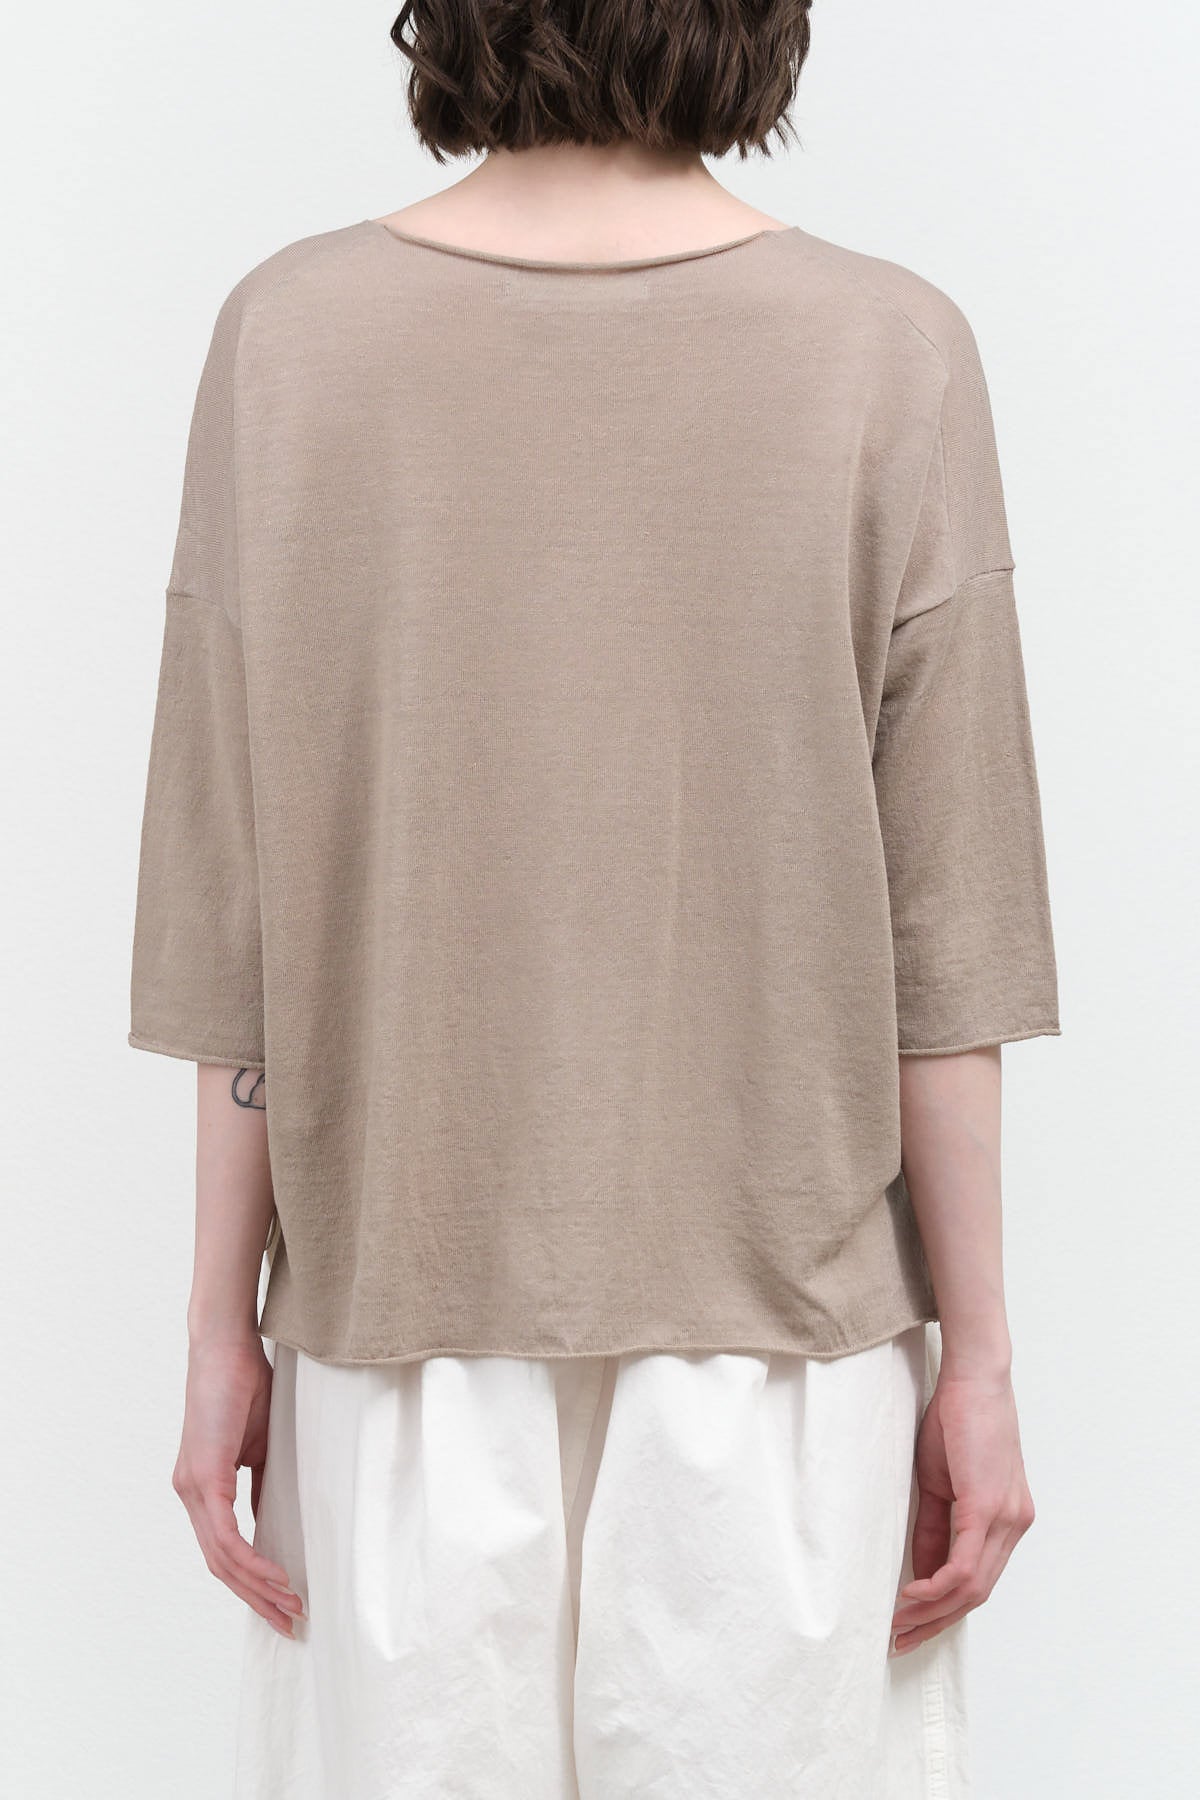 Linen Pullover 3/4 Sleeve by Evam Eva in Gray